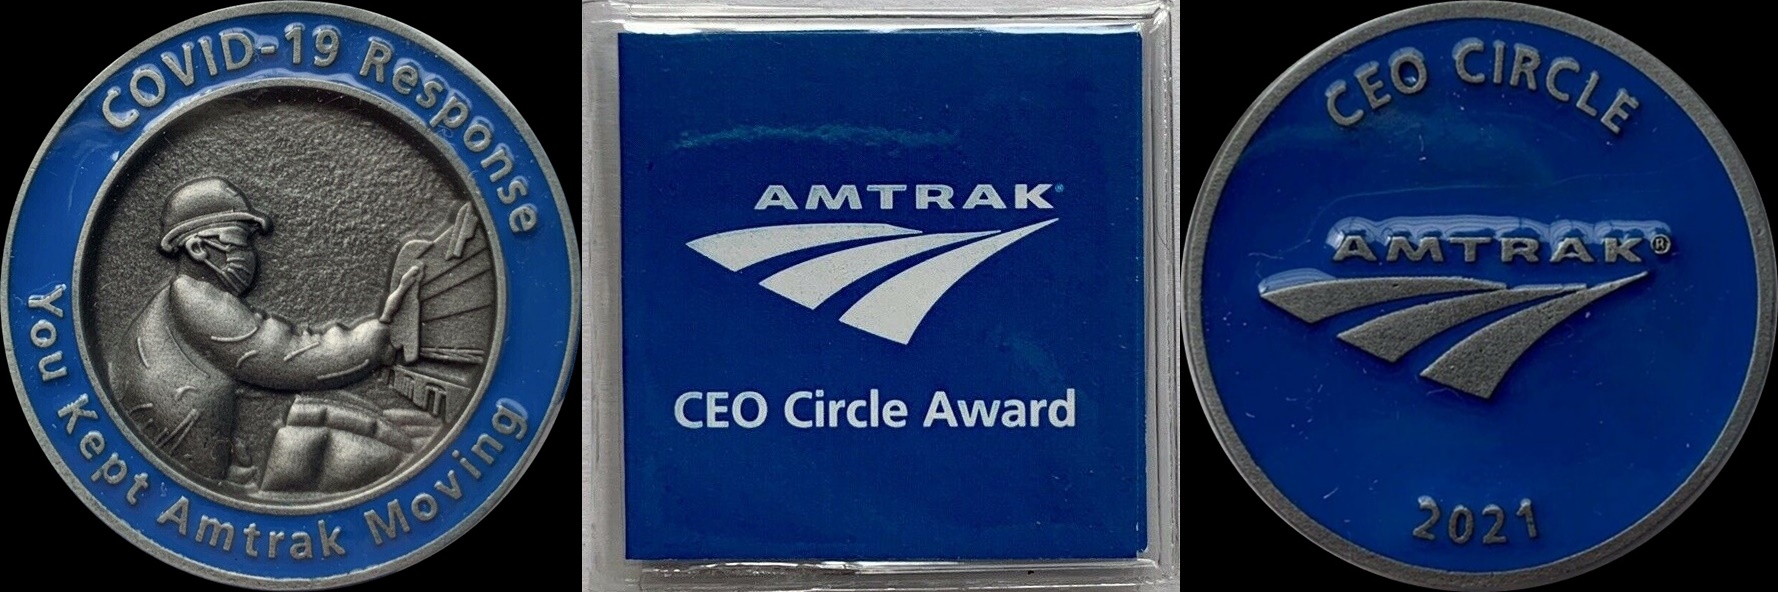 Amtrak Railroad Pandemic Response 2021 Employee  Coin 1-horz.jpg